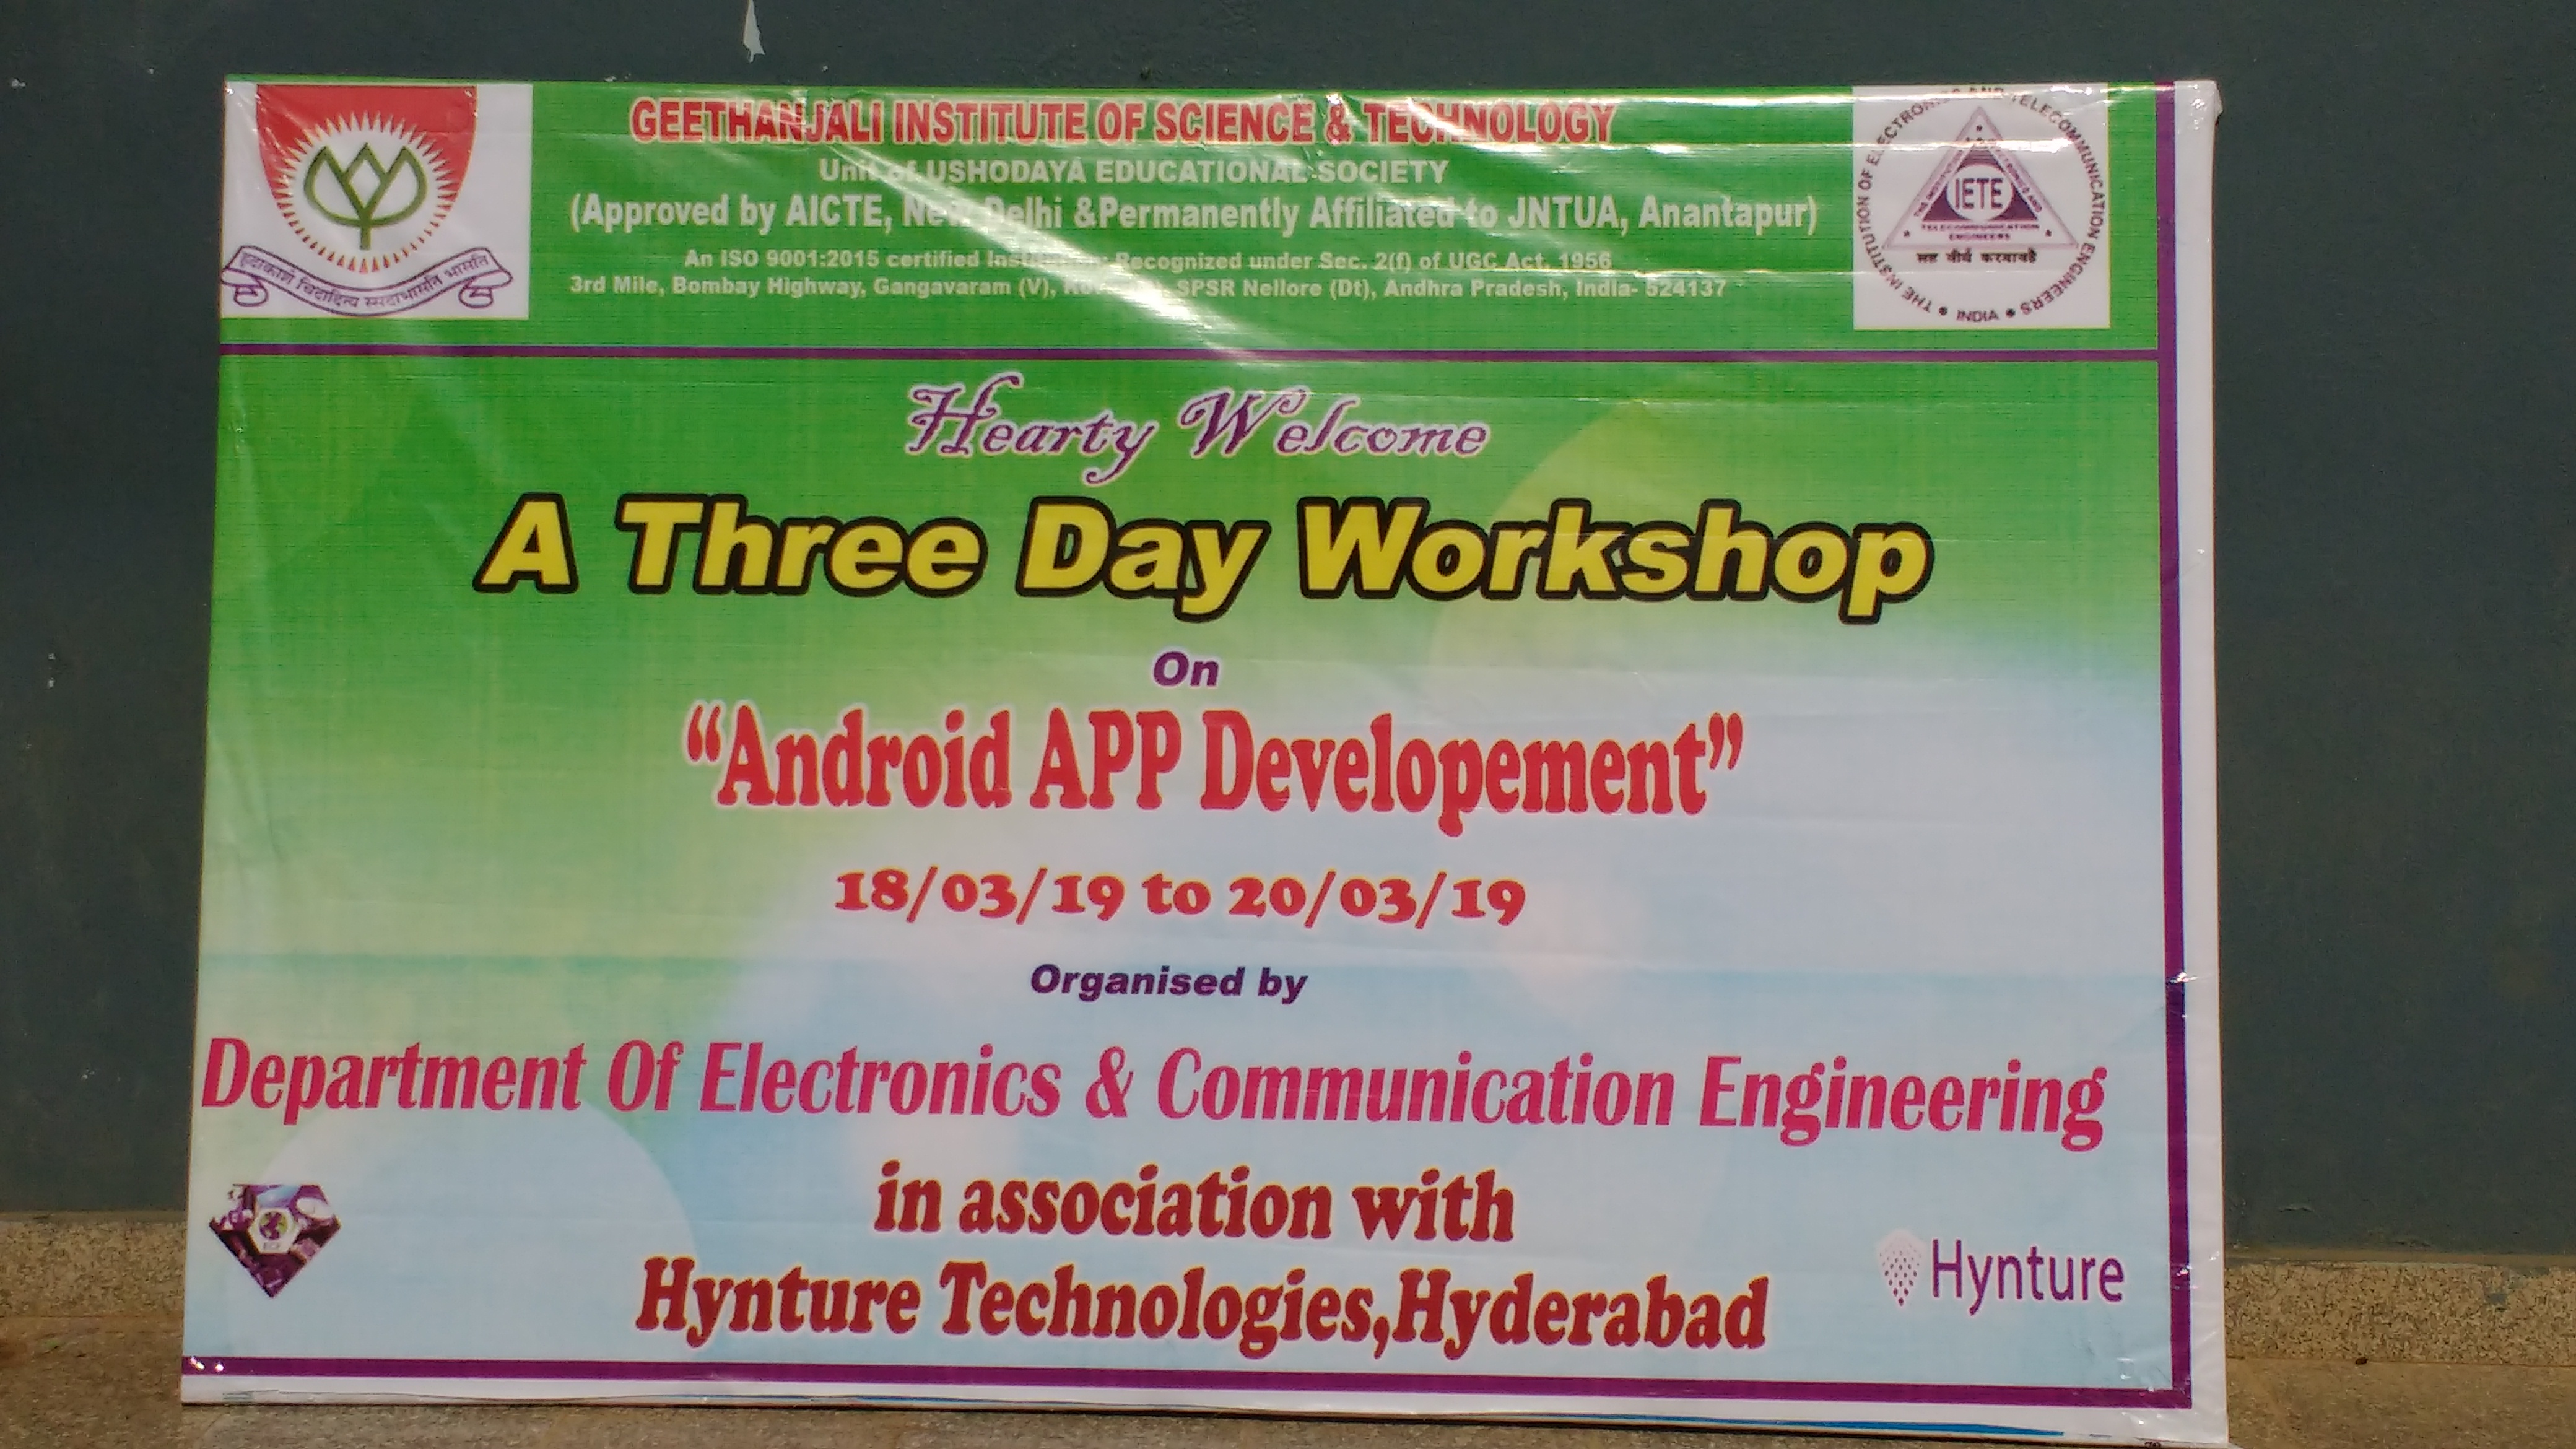 Android App Development | Geethanjali